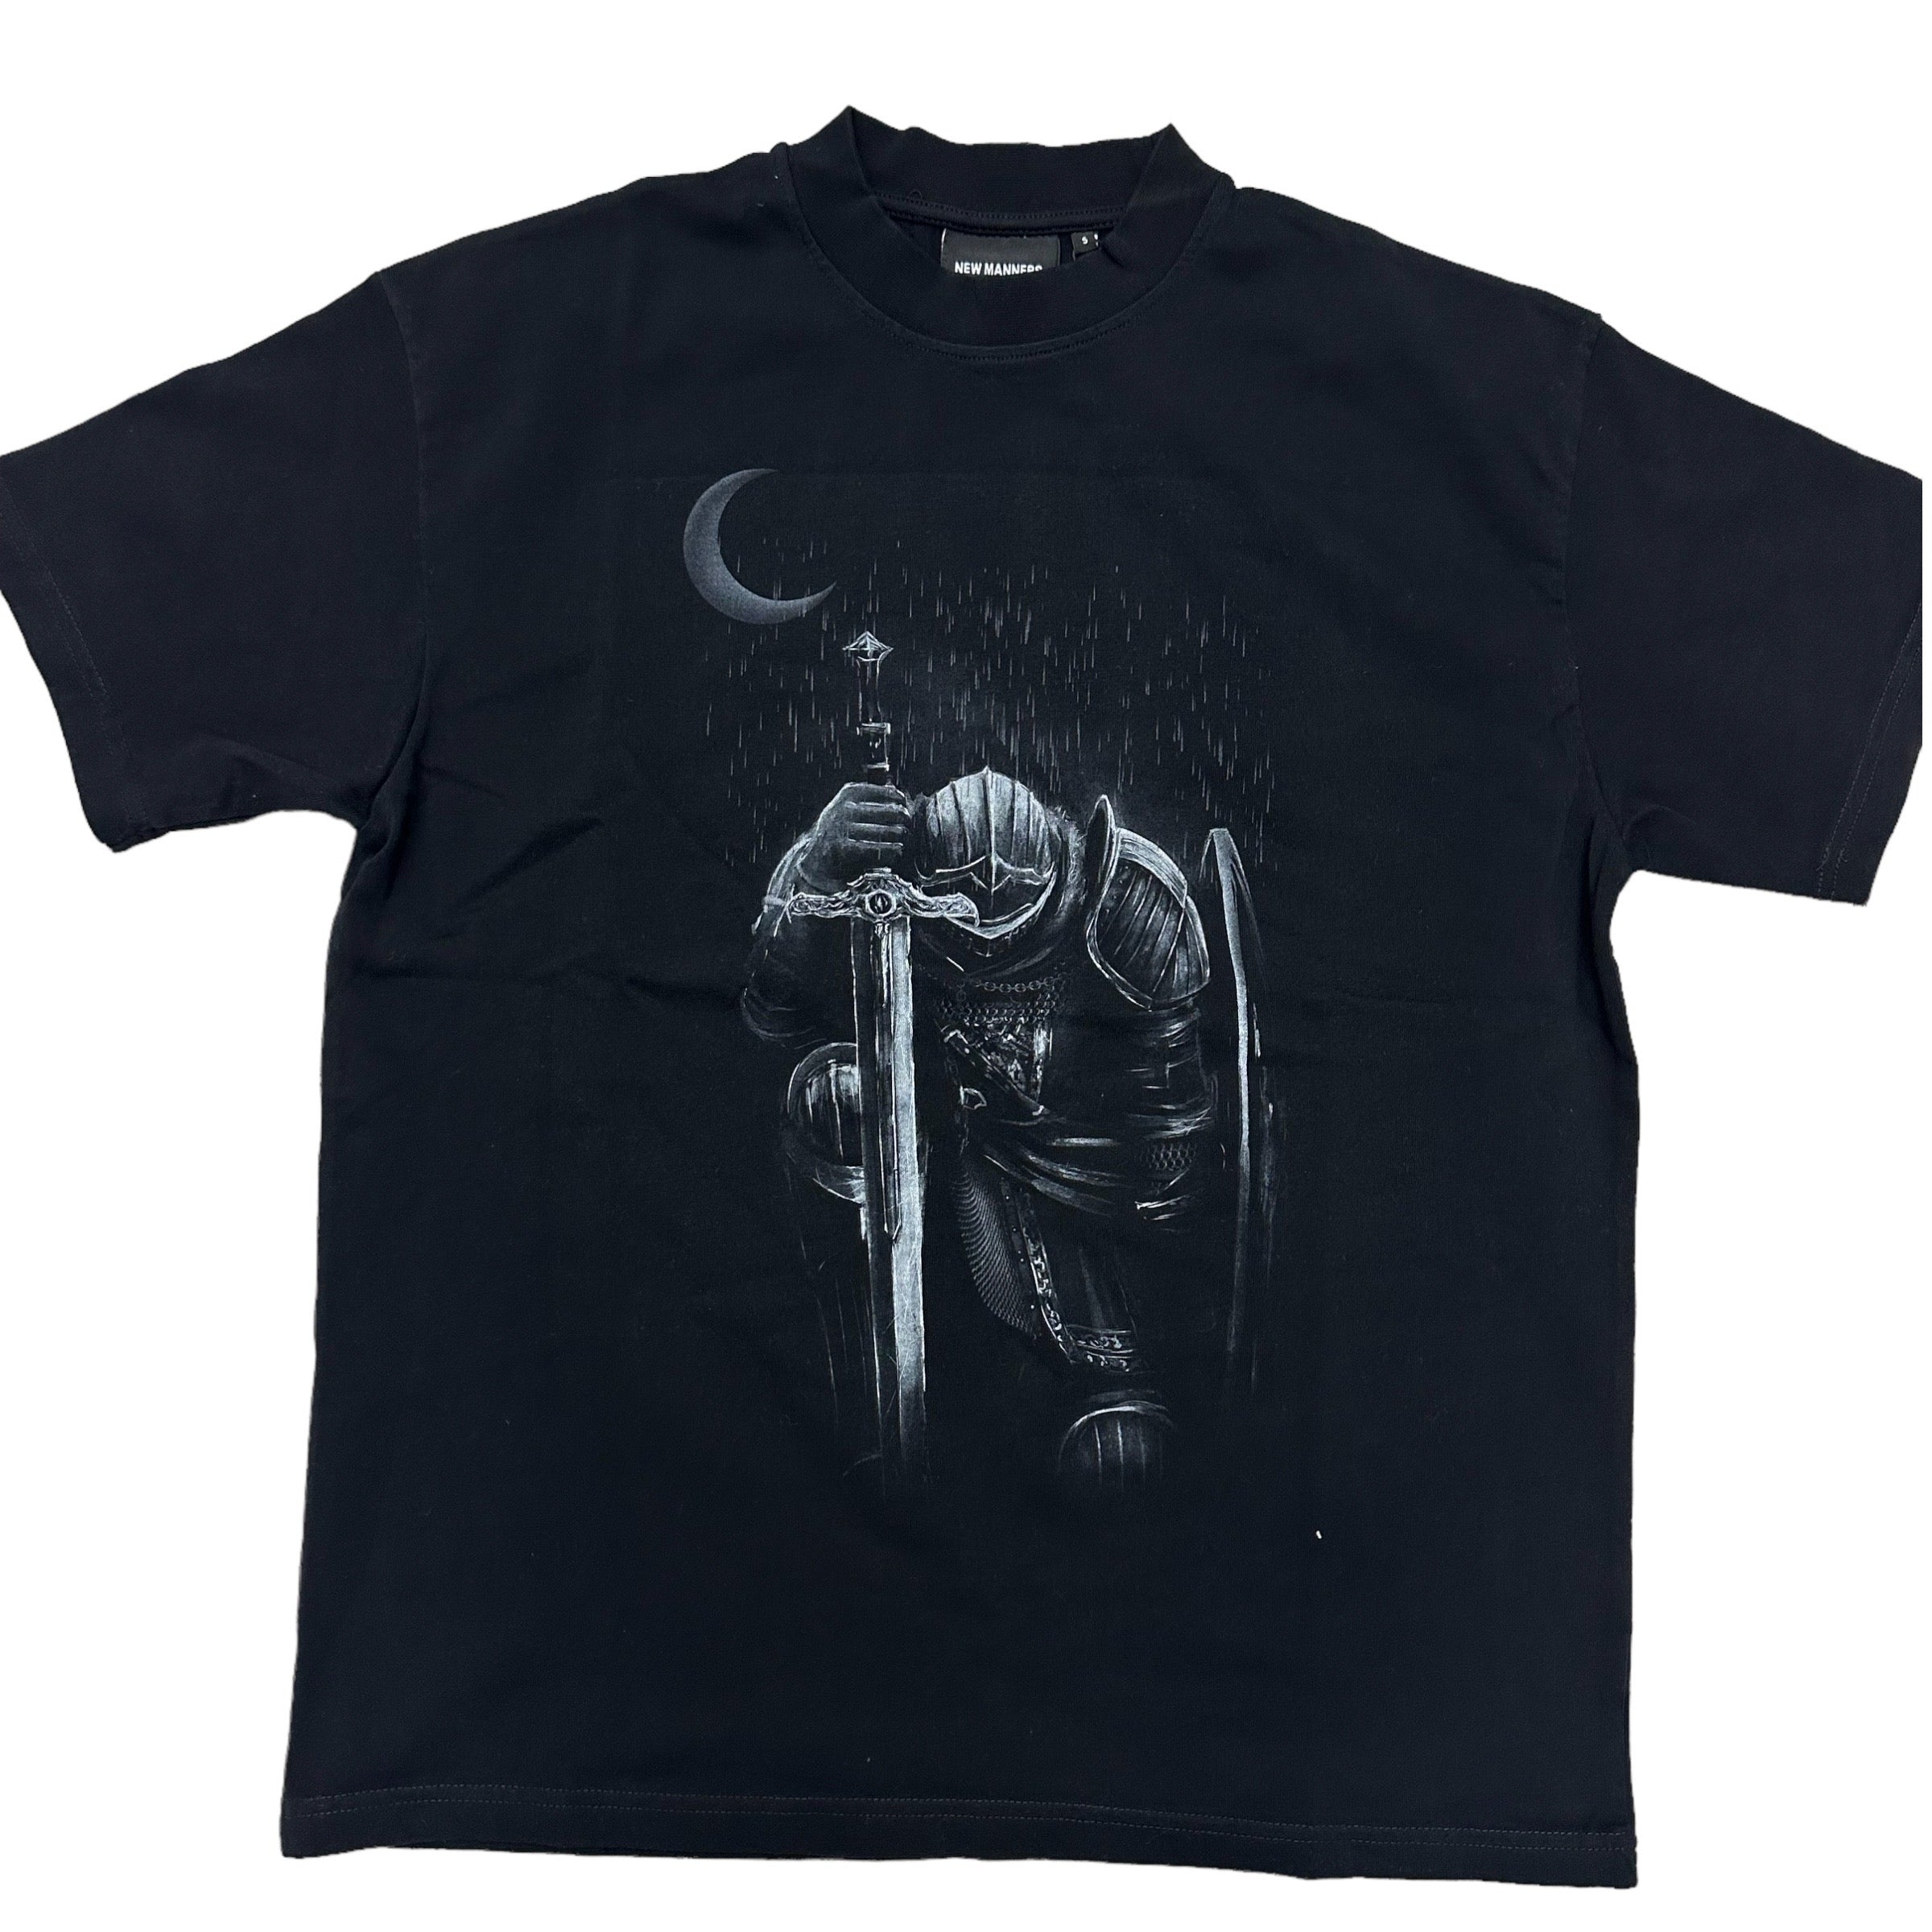 Manners OverSize Sword Of Crescent T-shirt Black